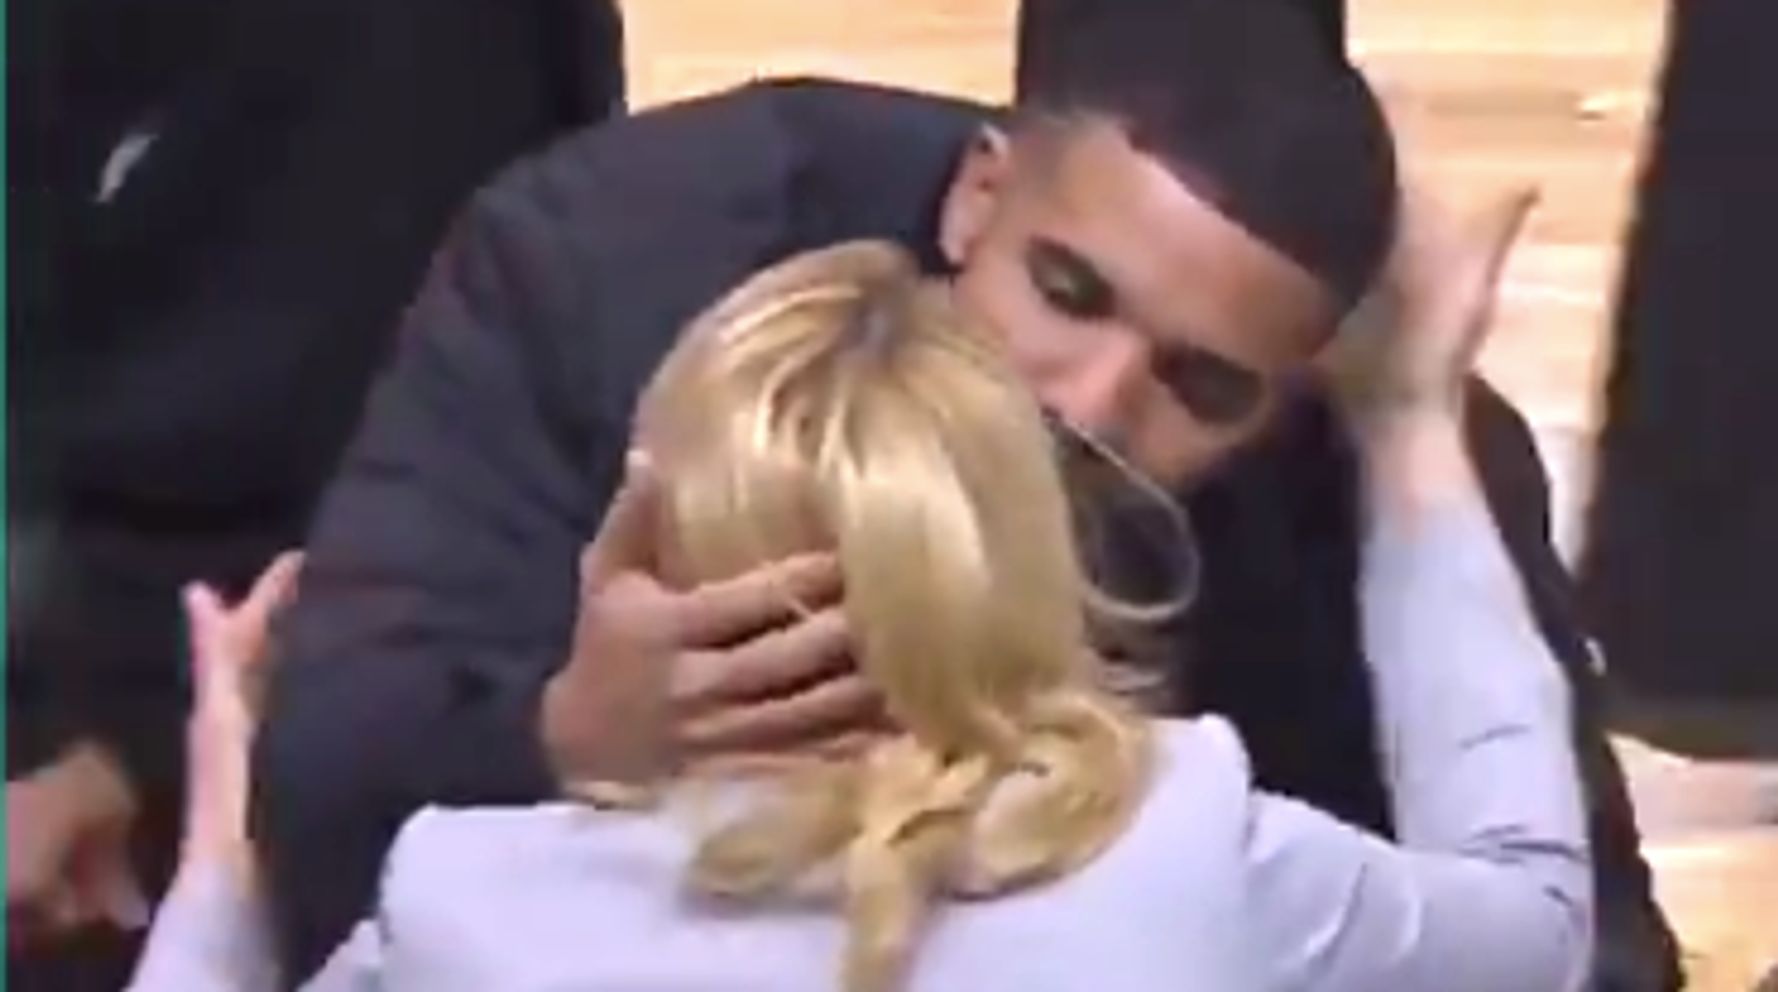 Doris Burke confused by Drake's advances - ESPN Video